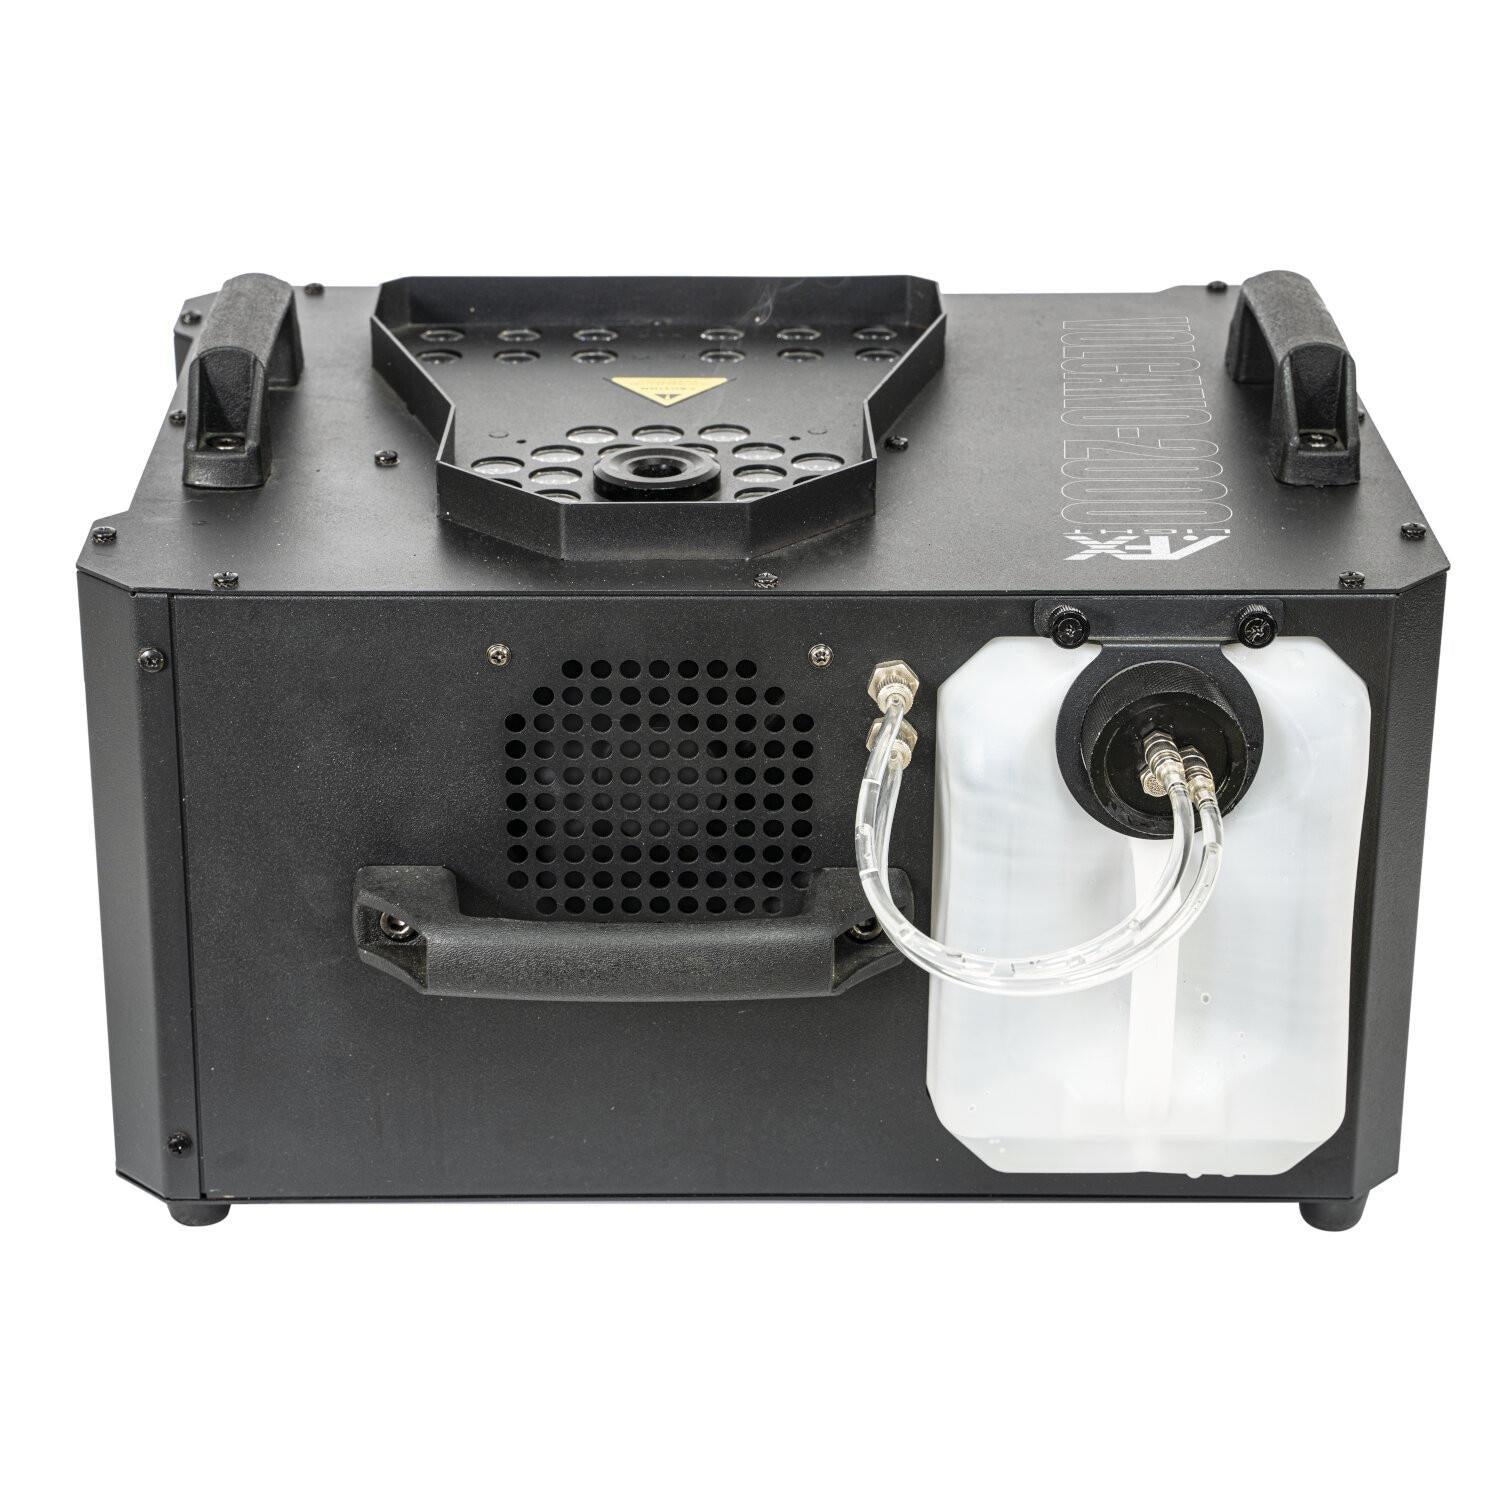 AFX Volcano 2000 GEYSER Fog Machine 2000w With RGB LEDs - DY Pro Audio